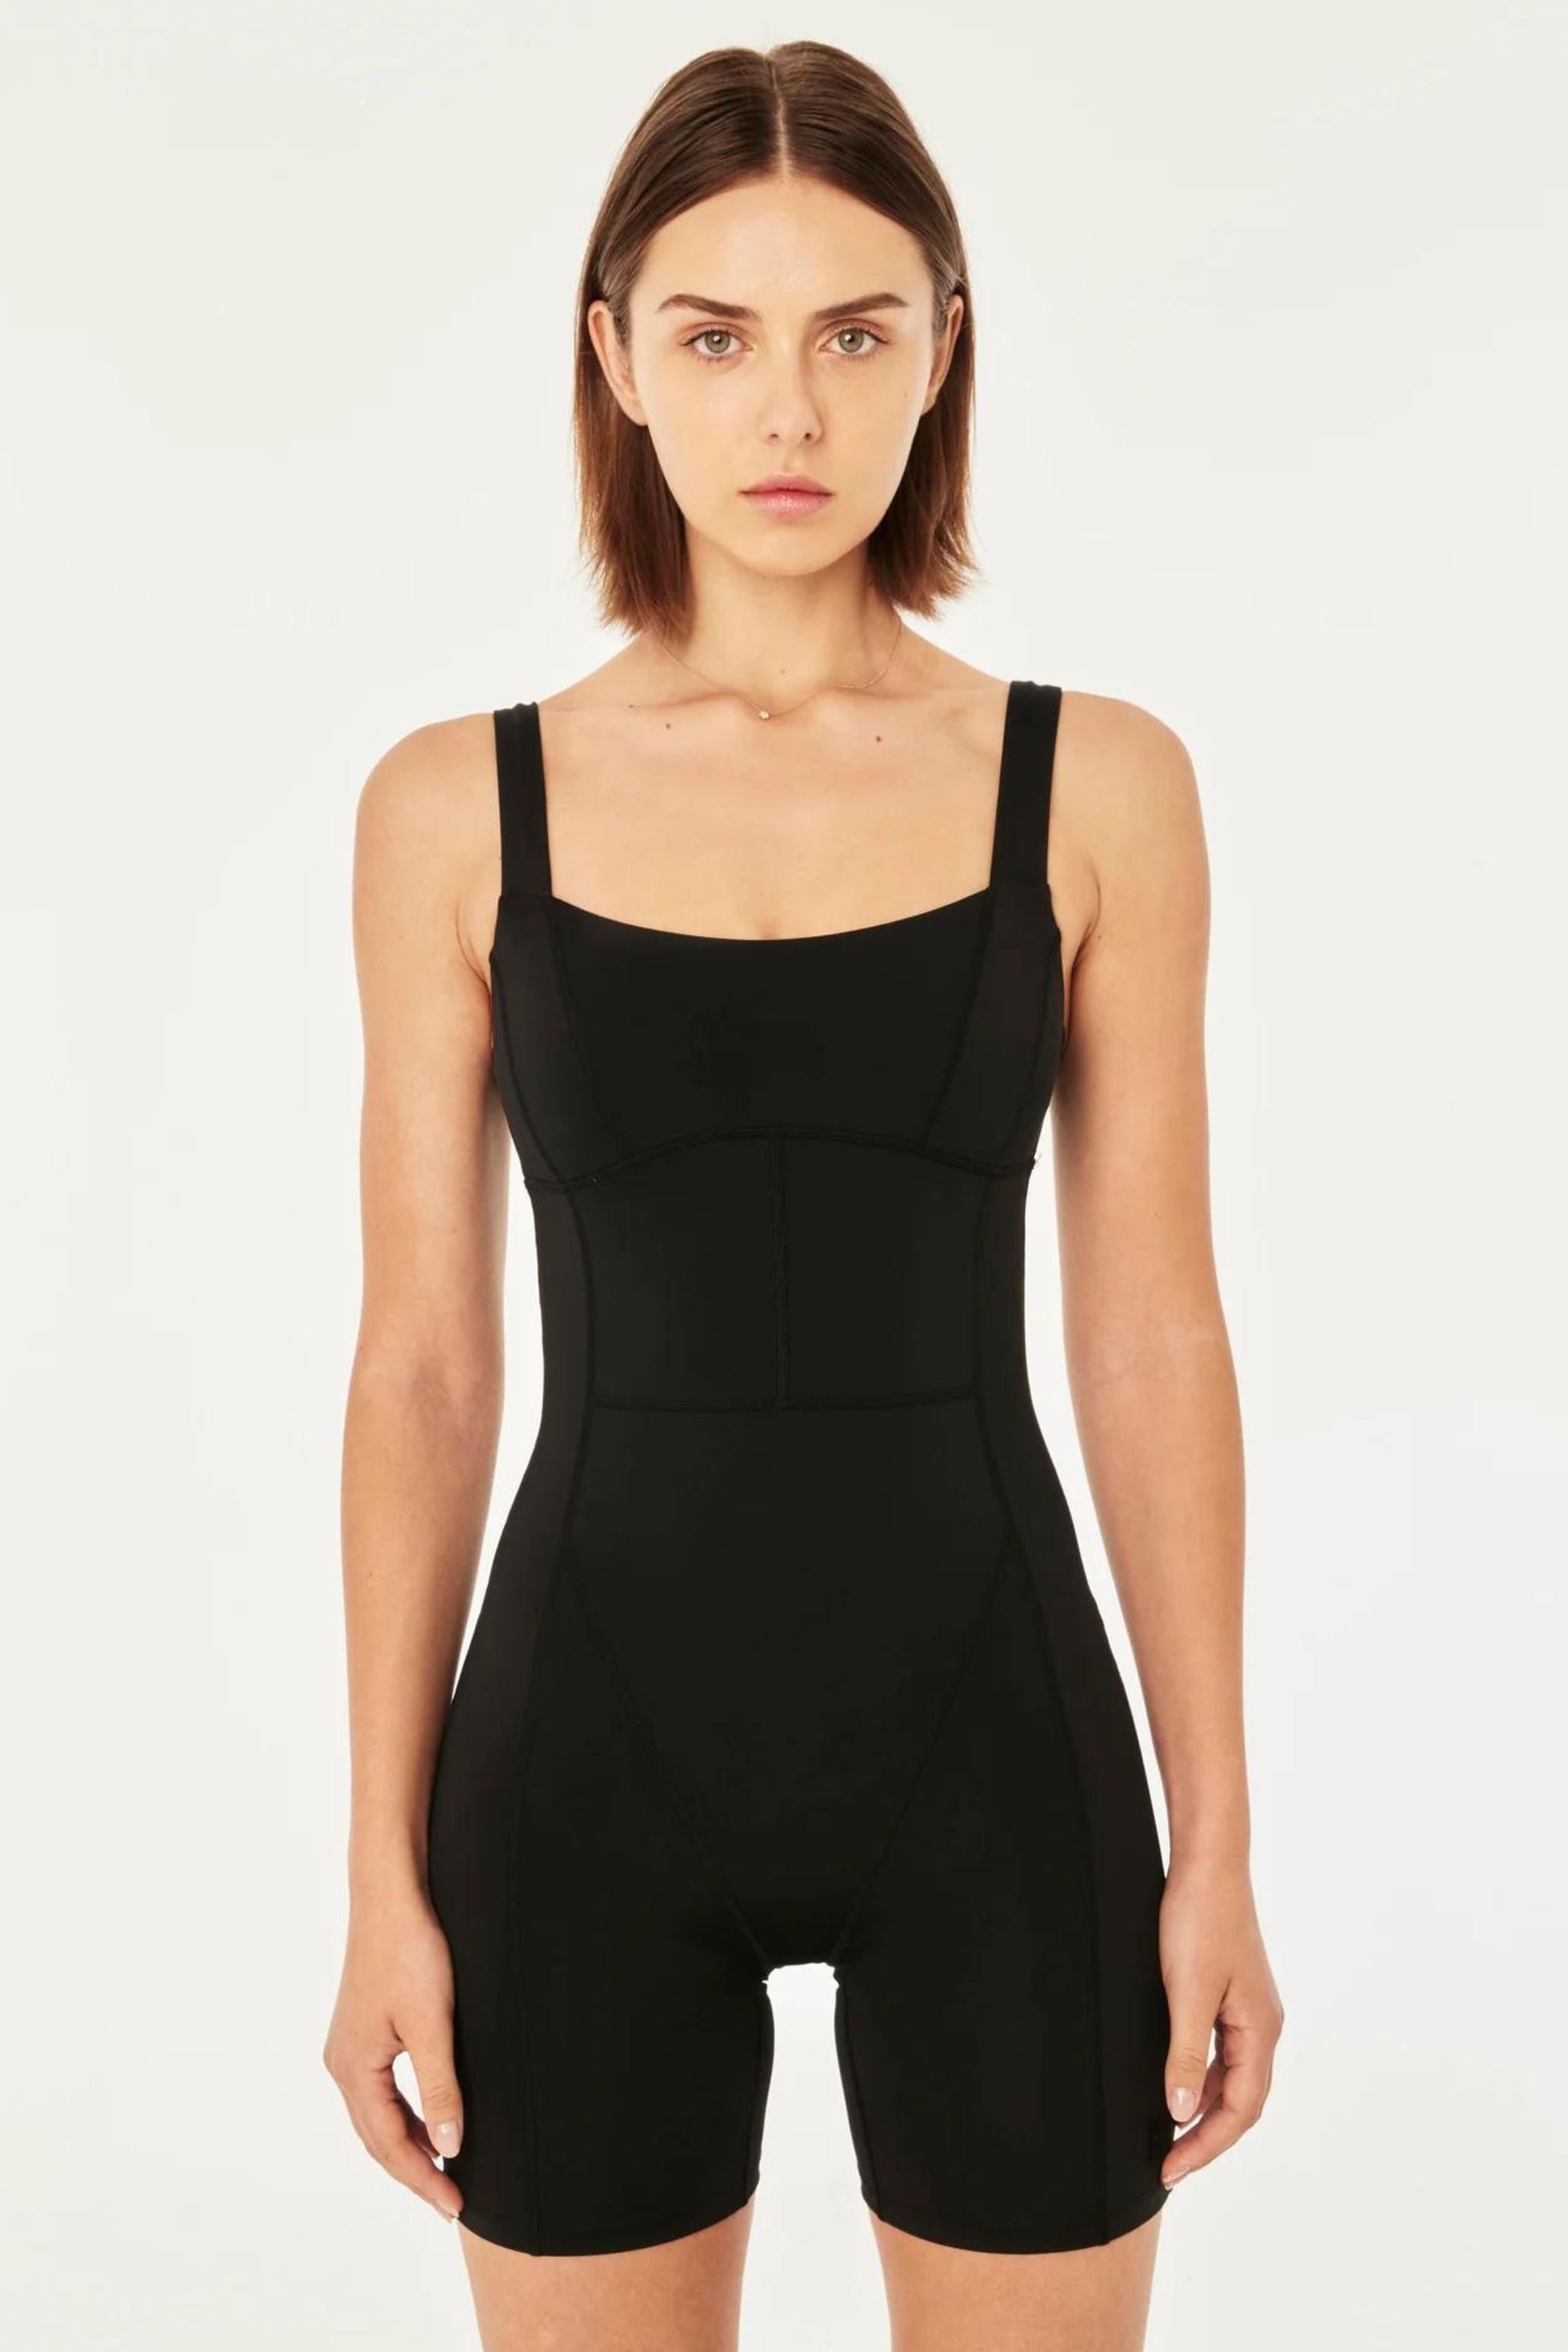 Stockerpoint Women's Body Romy Bodysuit, Black, L: Buy Online at Best Price  in UAE 